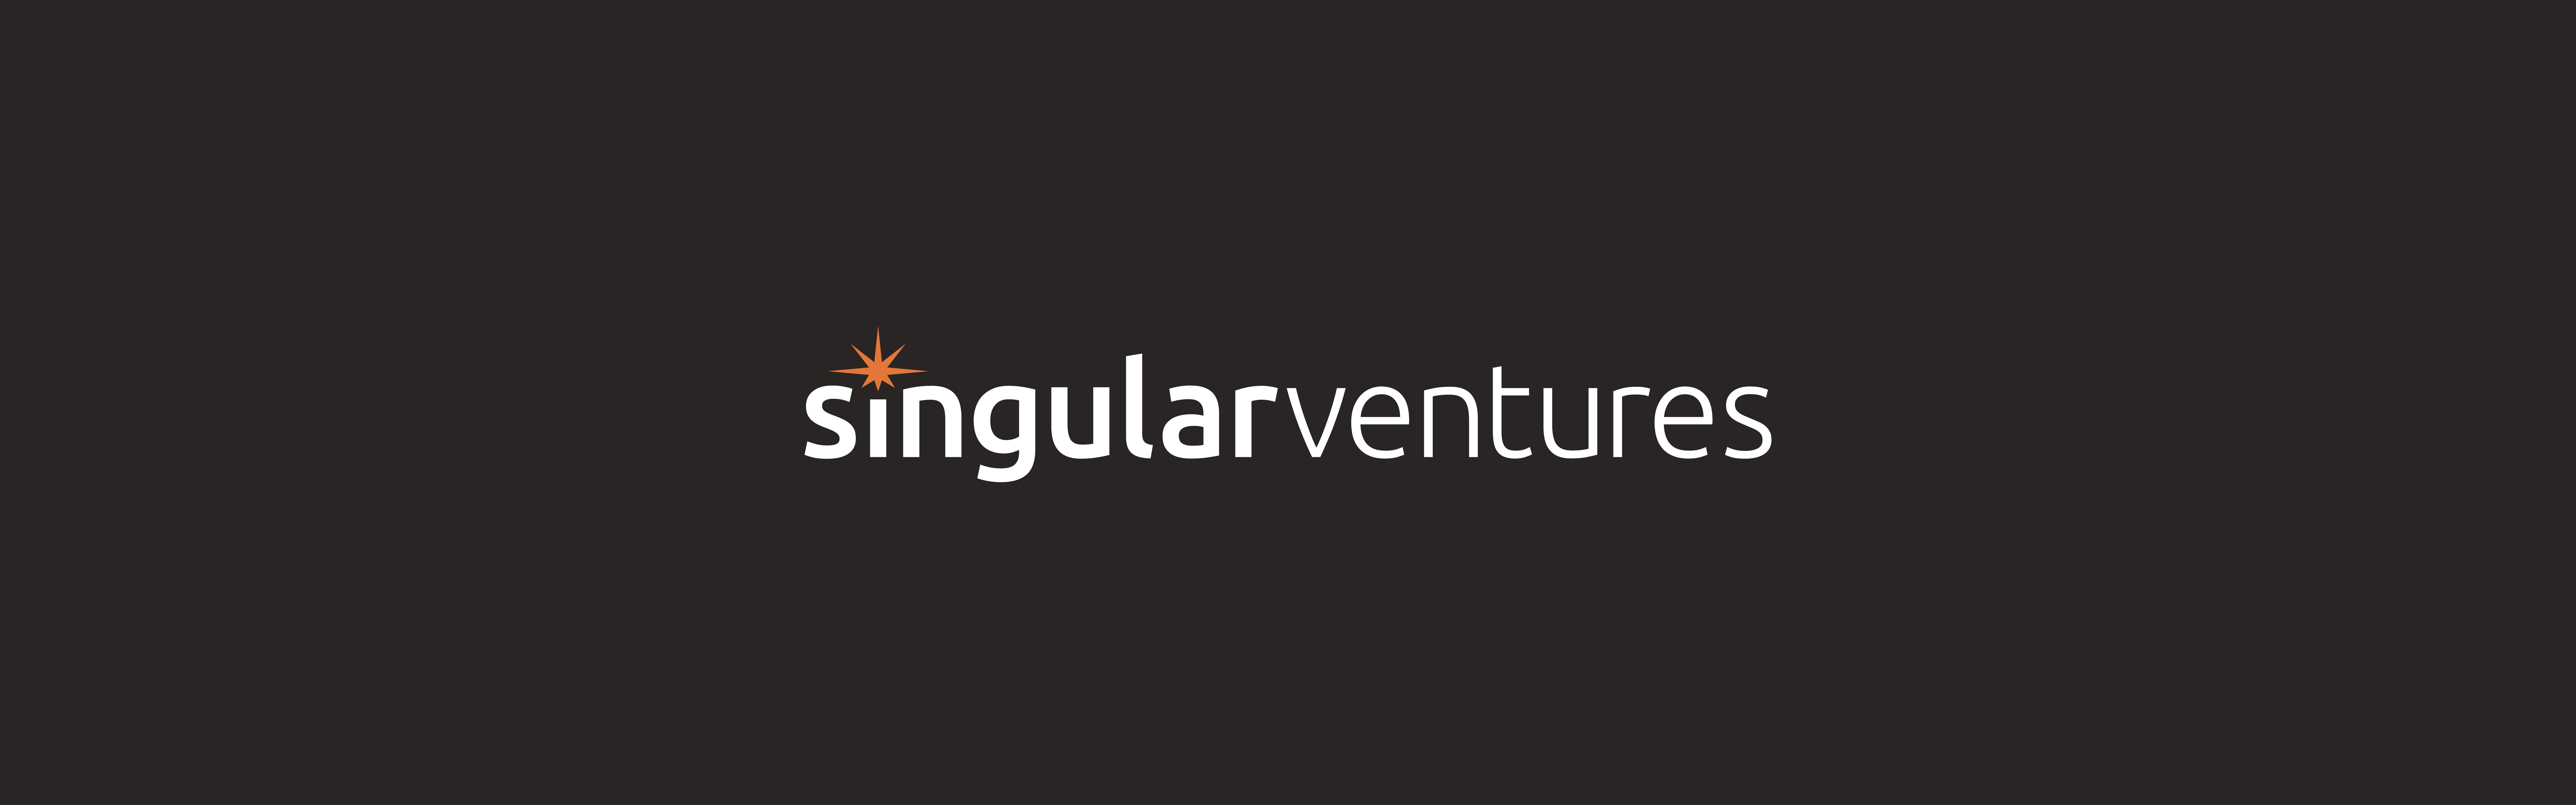 Logo of "Singular Ventures" on a dark background, featuring a stylized orange star above the 'i' in 'singular'.